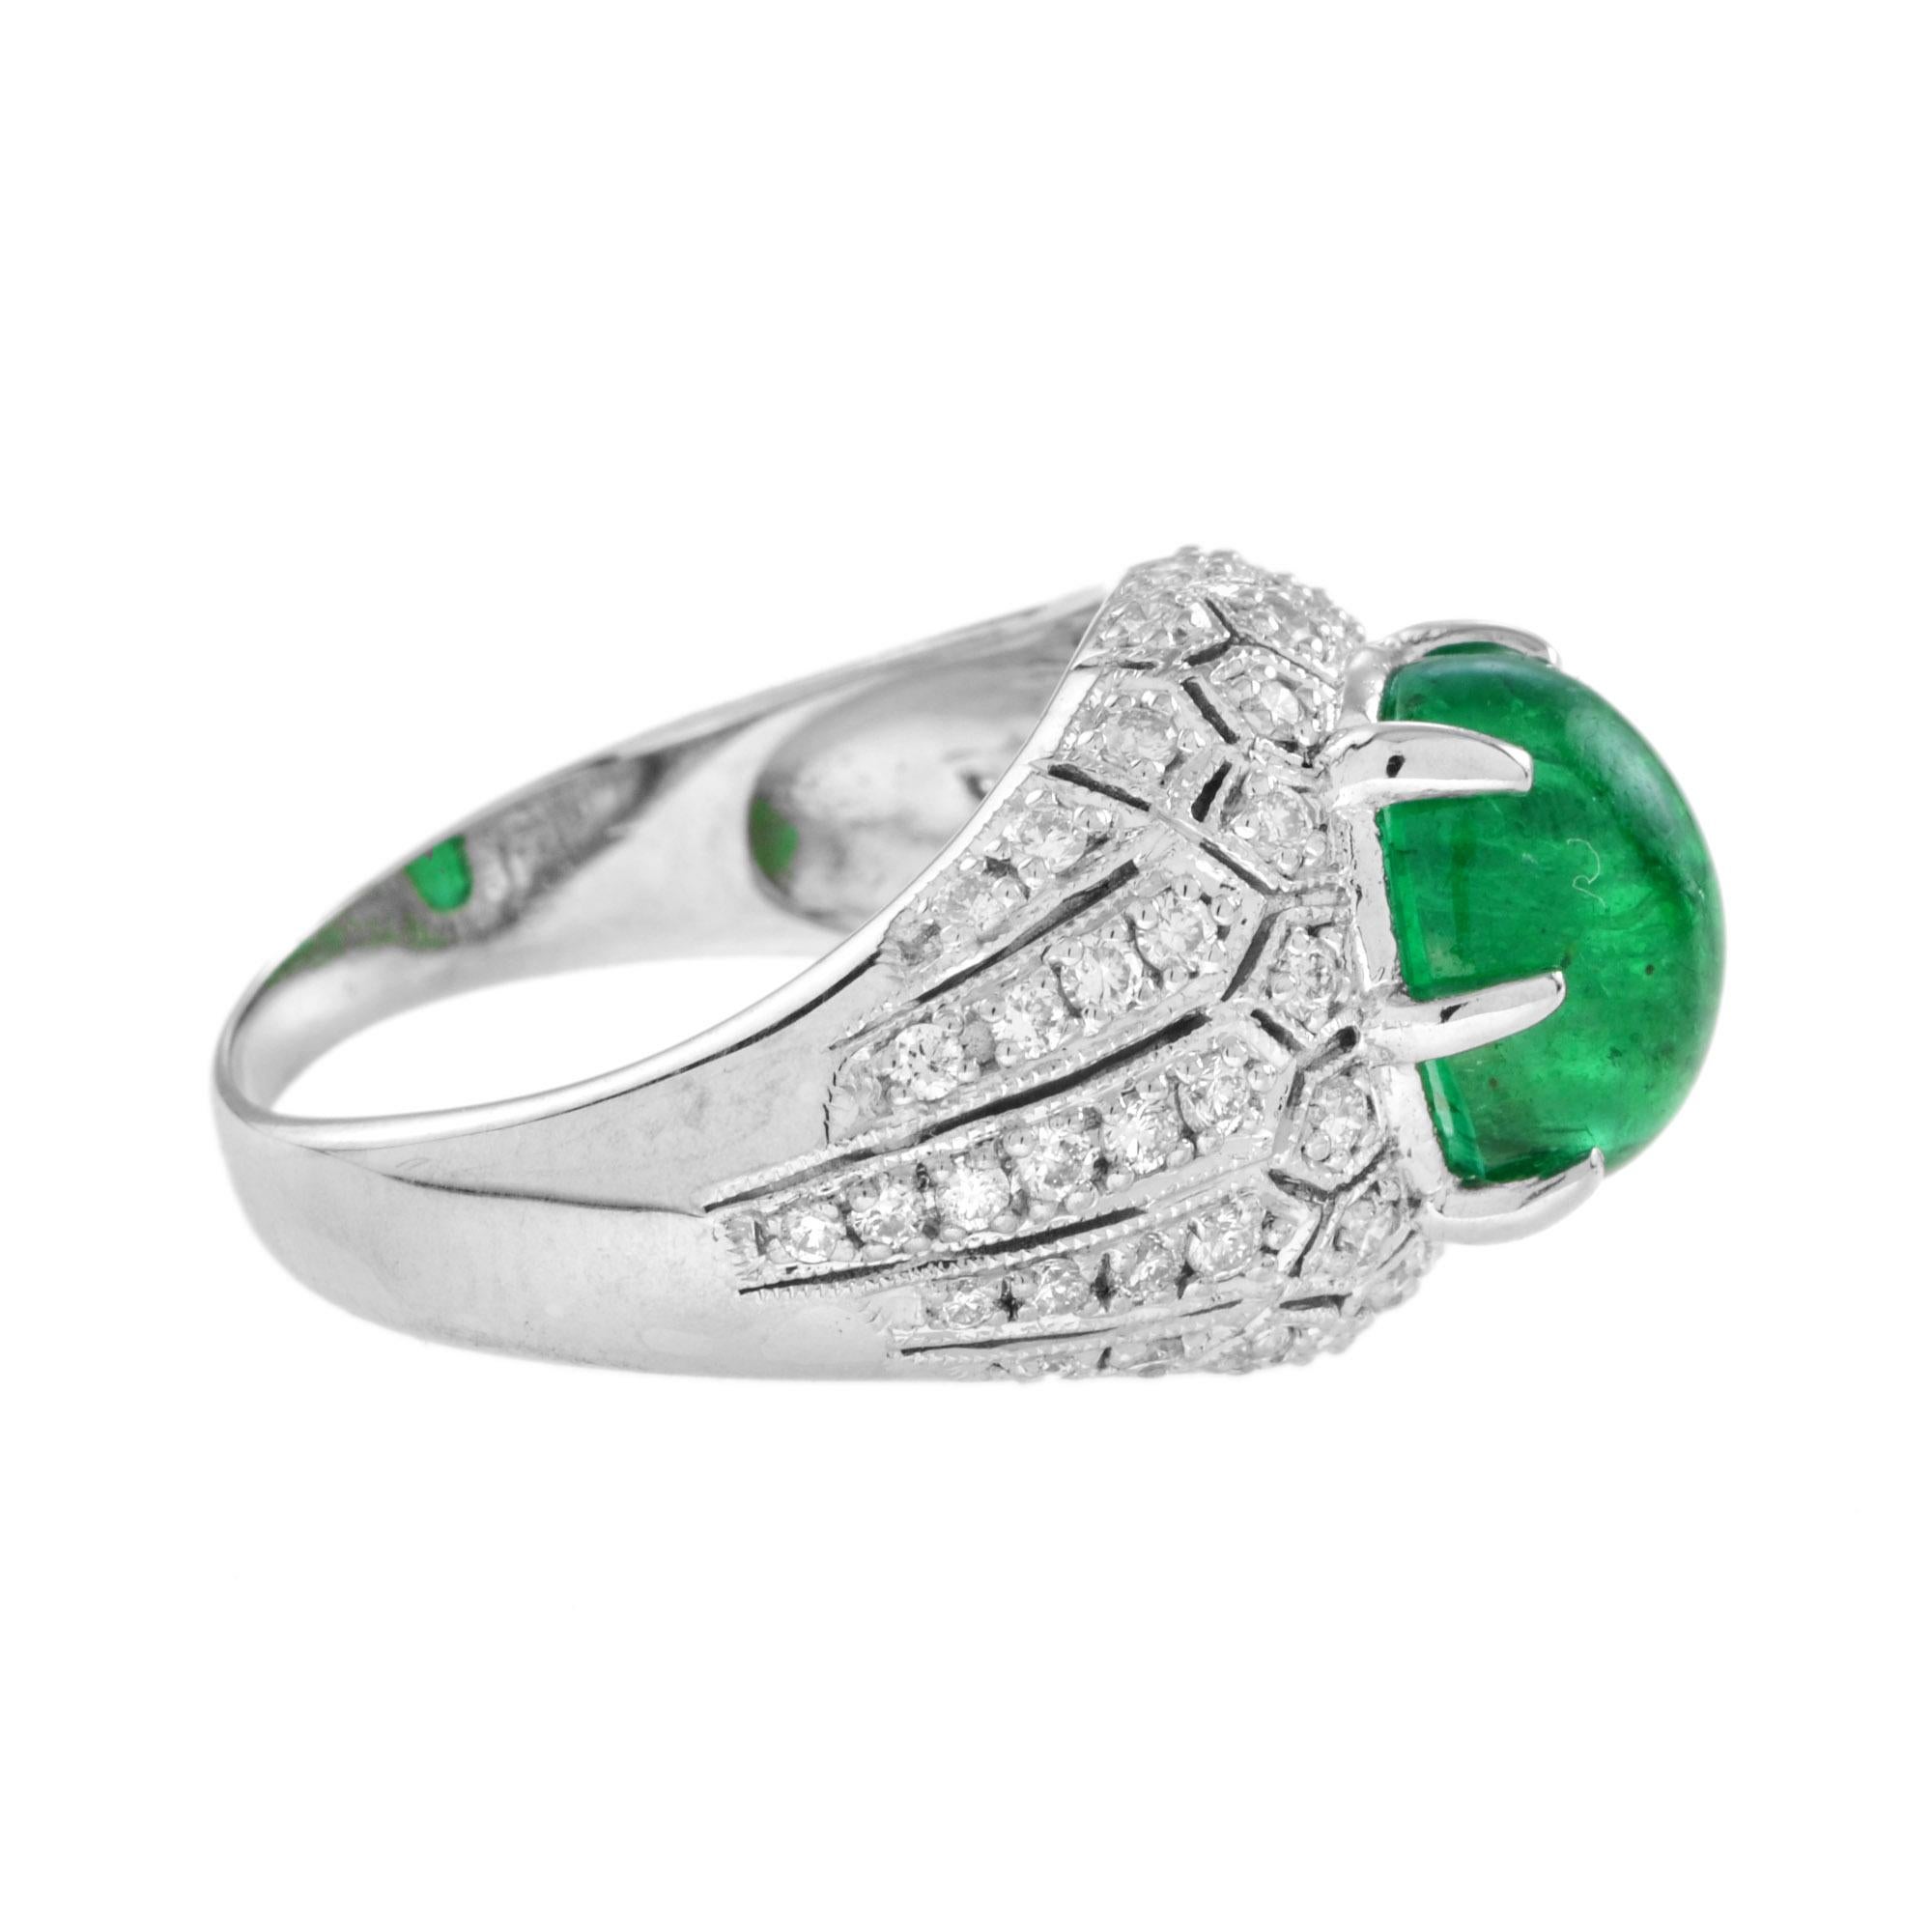 Art Deco Cabochon Emerald and Diamond Dome Ring in 14K White Gold